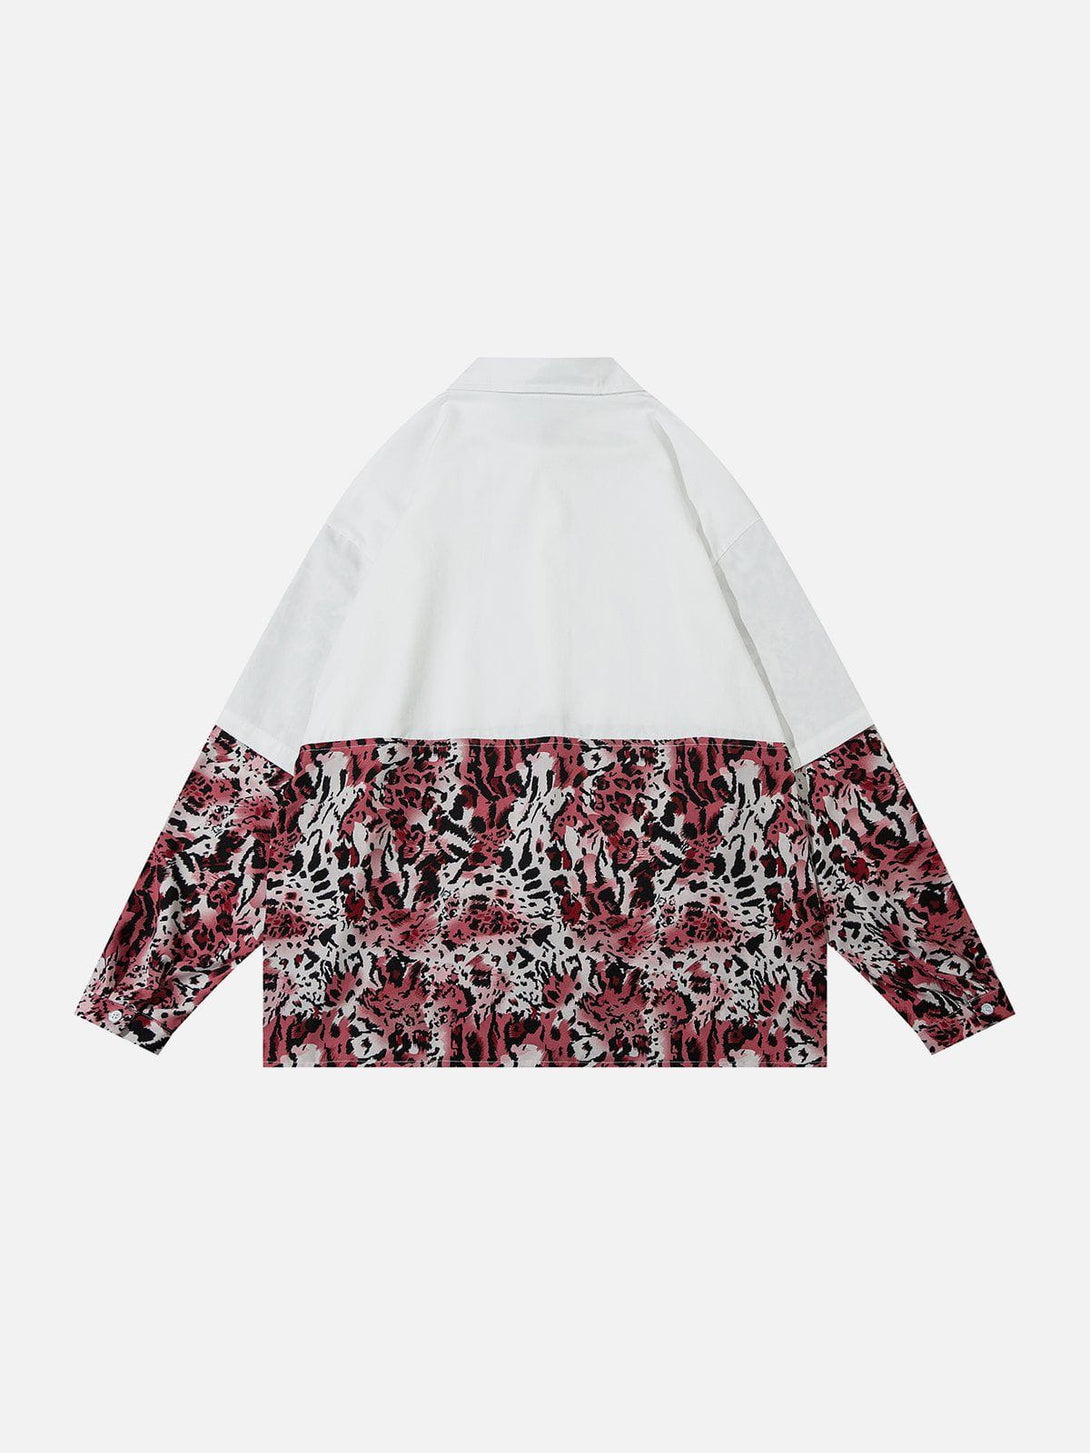 Majesda® - Leopard Print Paneled Long Sleeve Shirt outfit ideas streetwear fashion